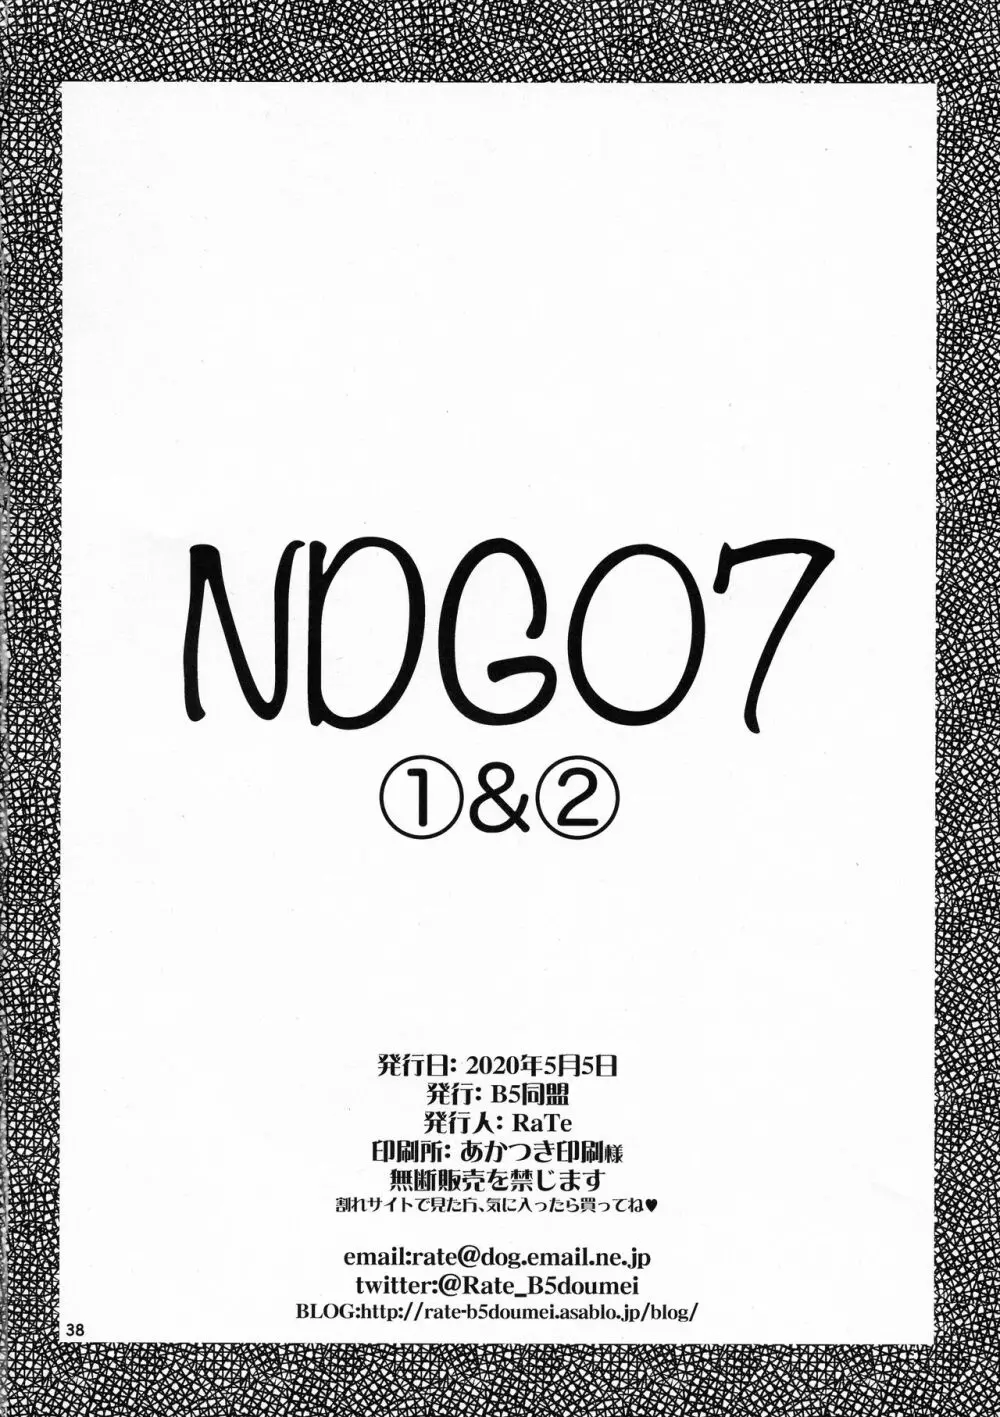 NDG07 1&2 36ページ